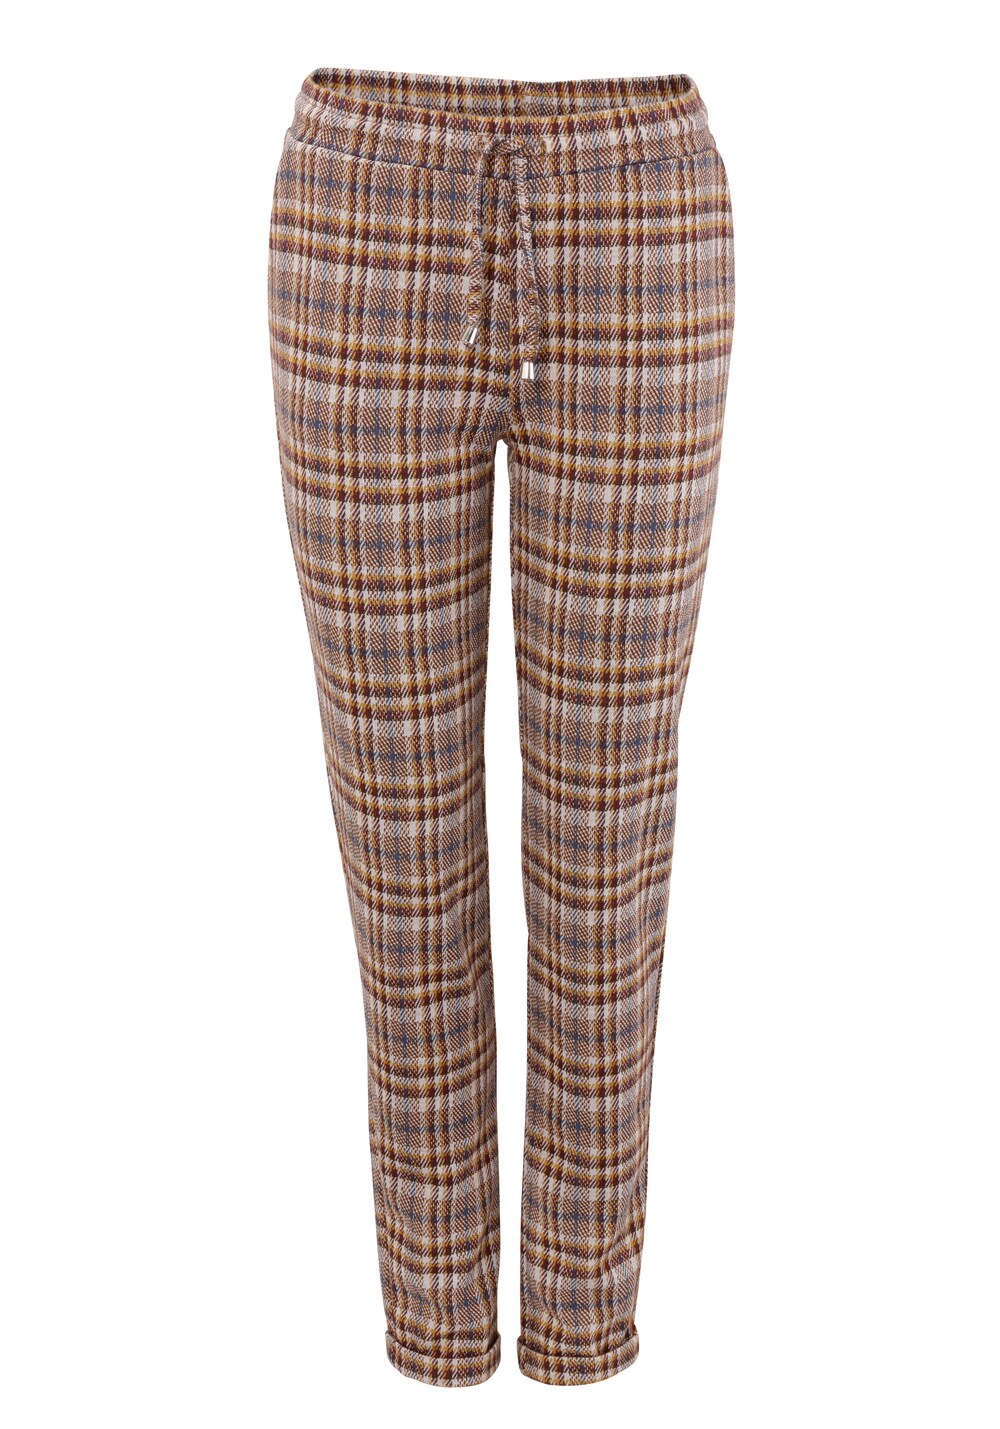 Обычные брюки Aniston Casual, коричневый